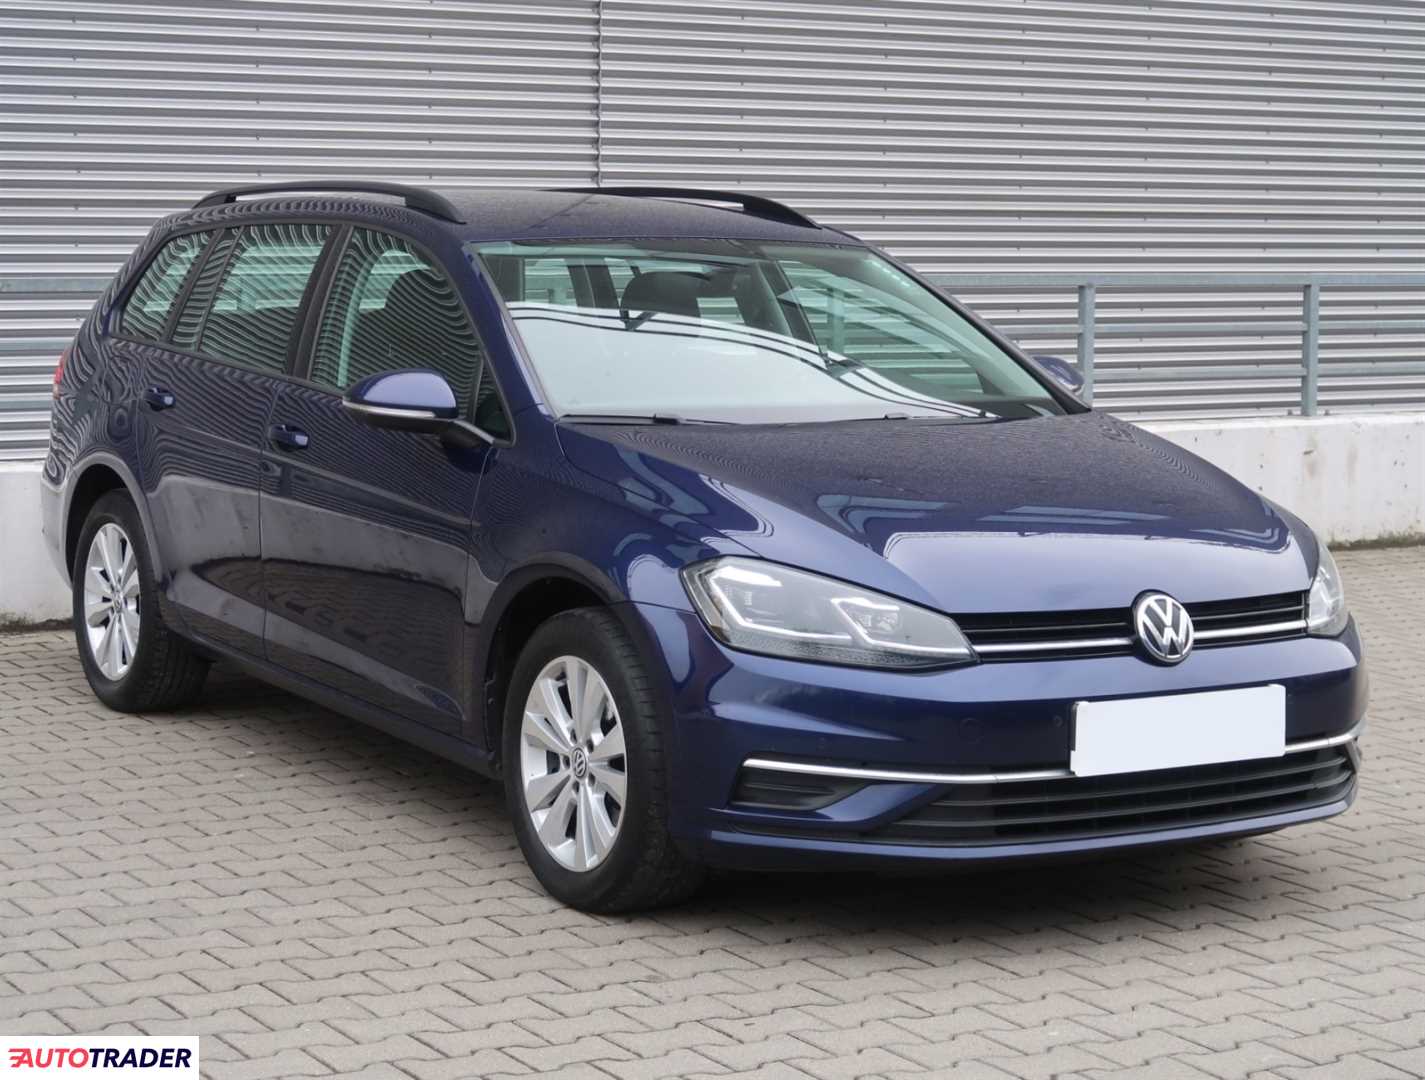 Volkswagen Golf 2017 1.6 113 KM